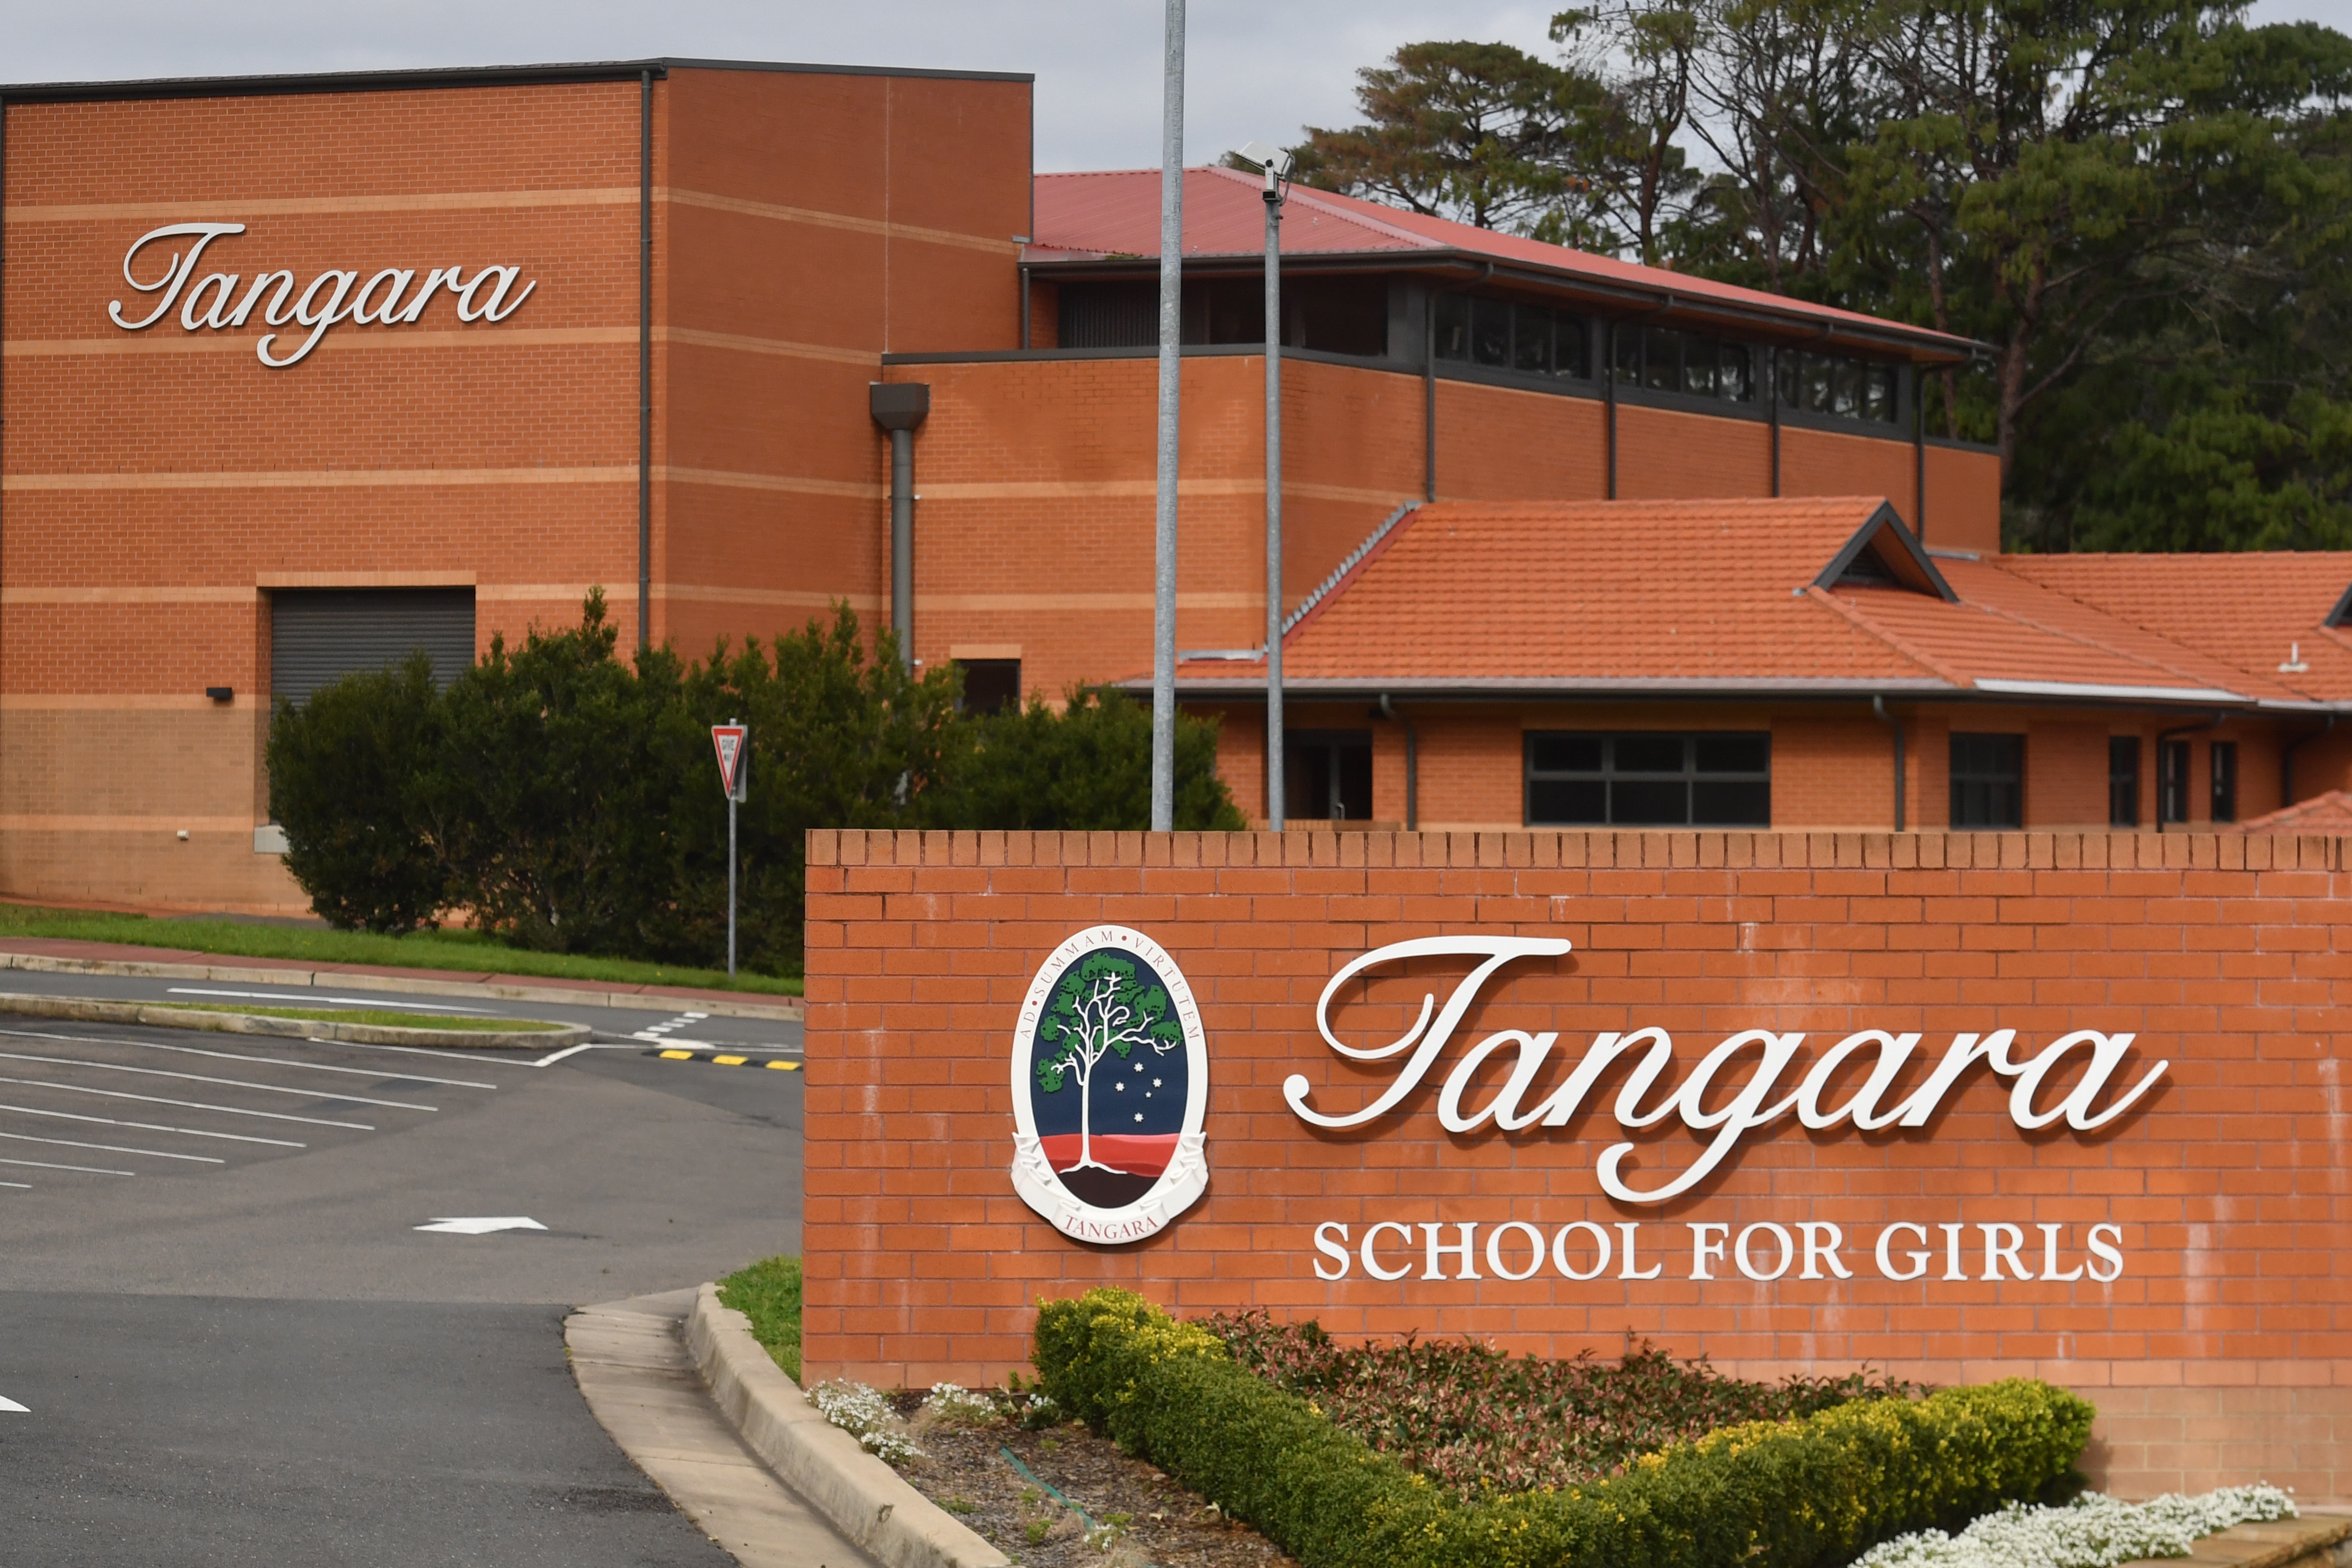 Tangara School for Girls in Cherrybrook, northwest of Sydney, Tuesday, 11 August, 2020. 